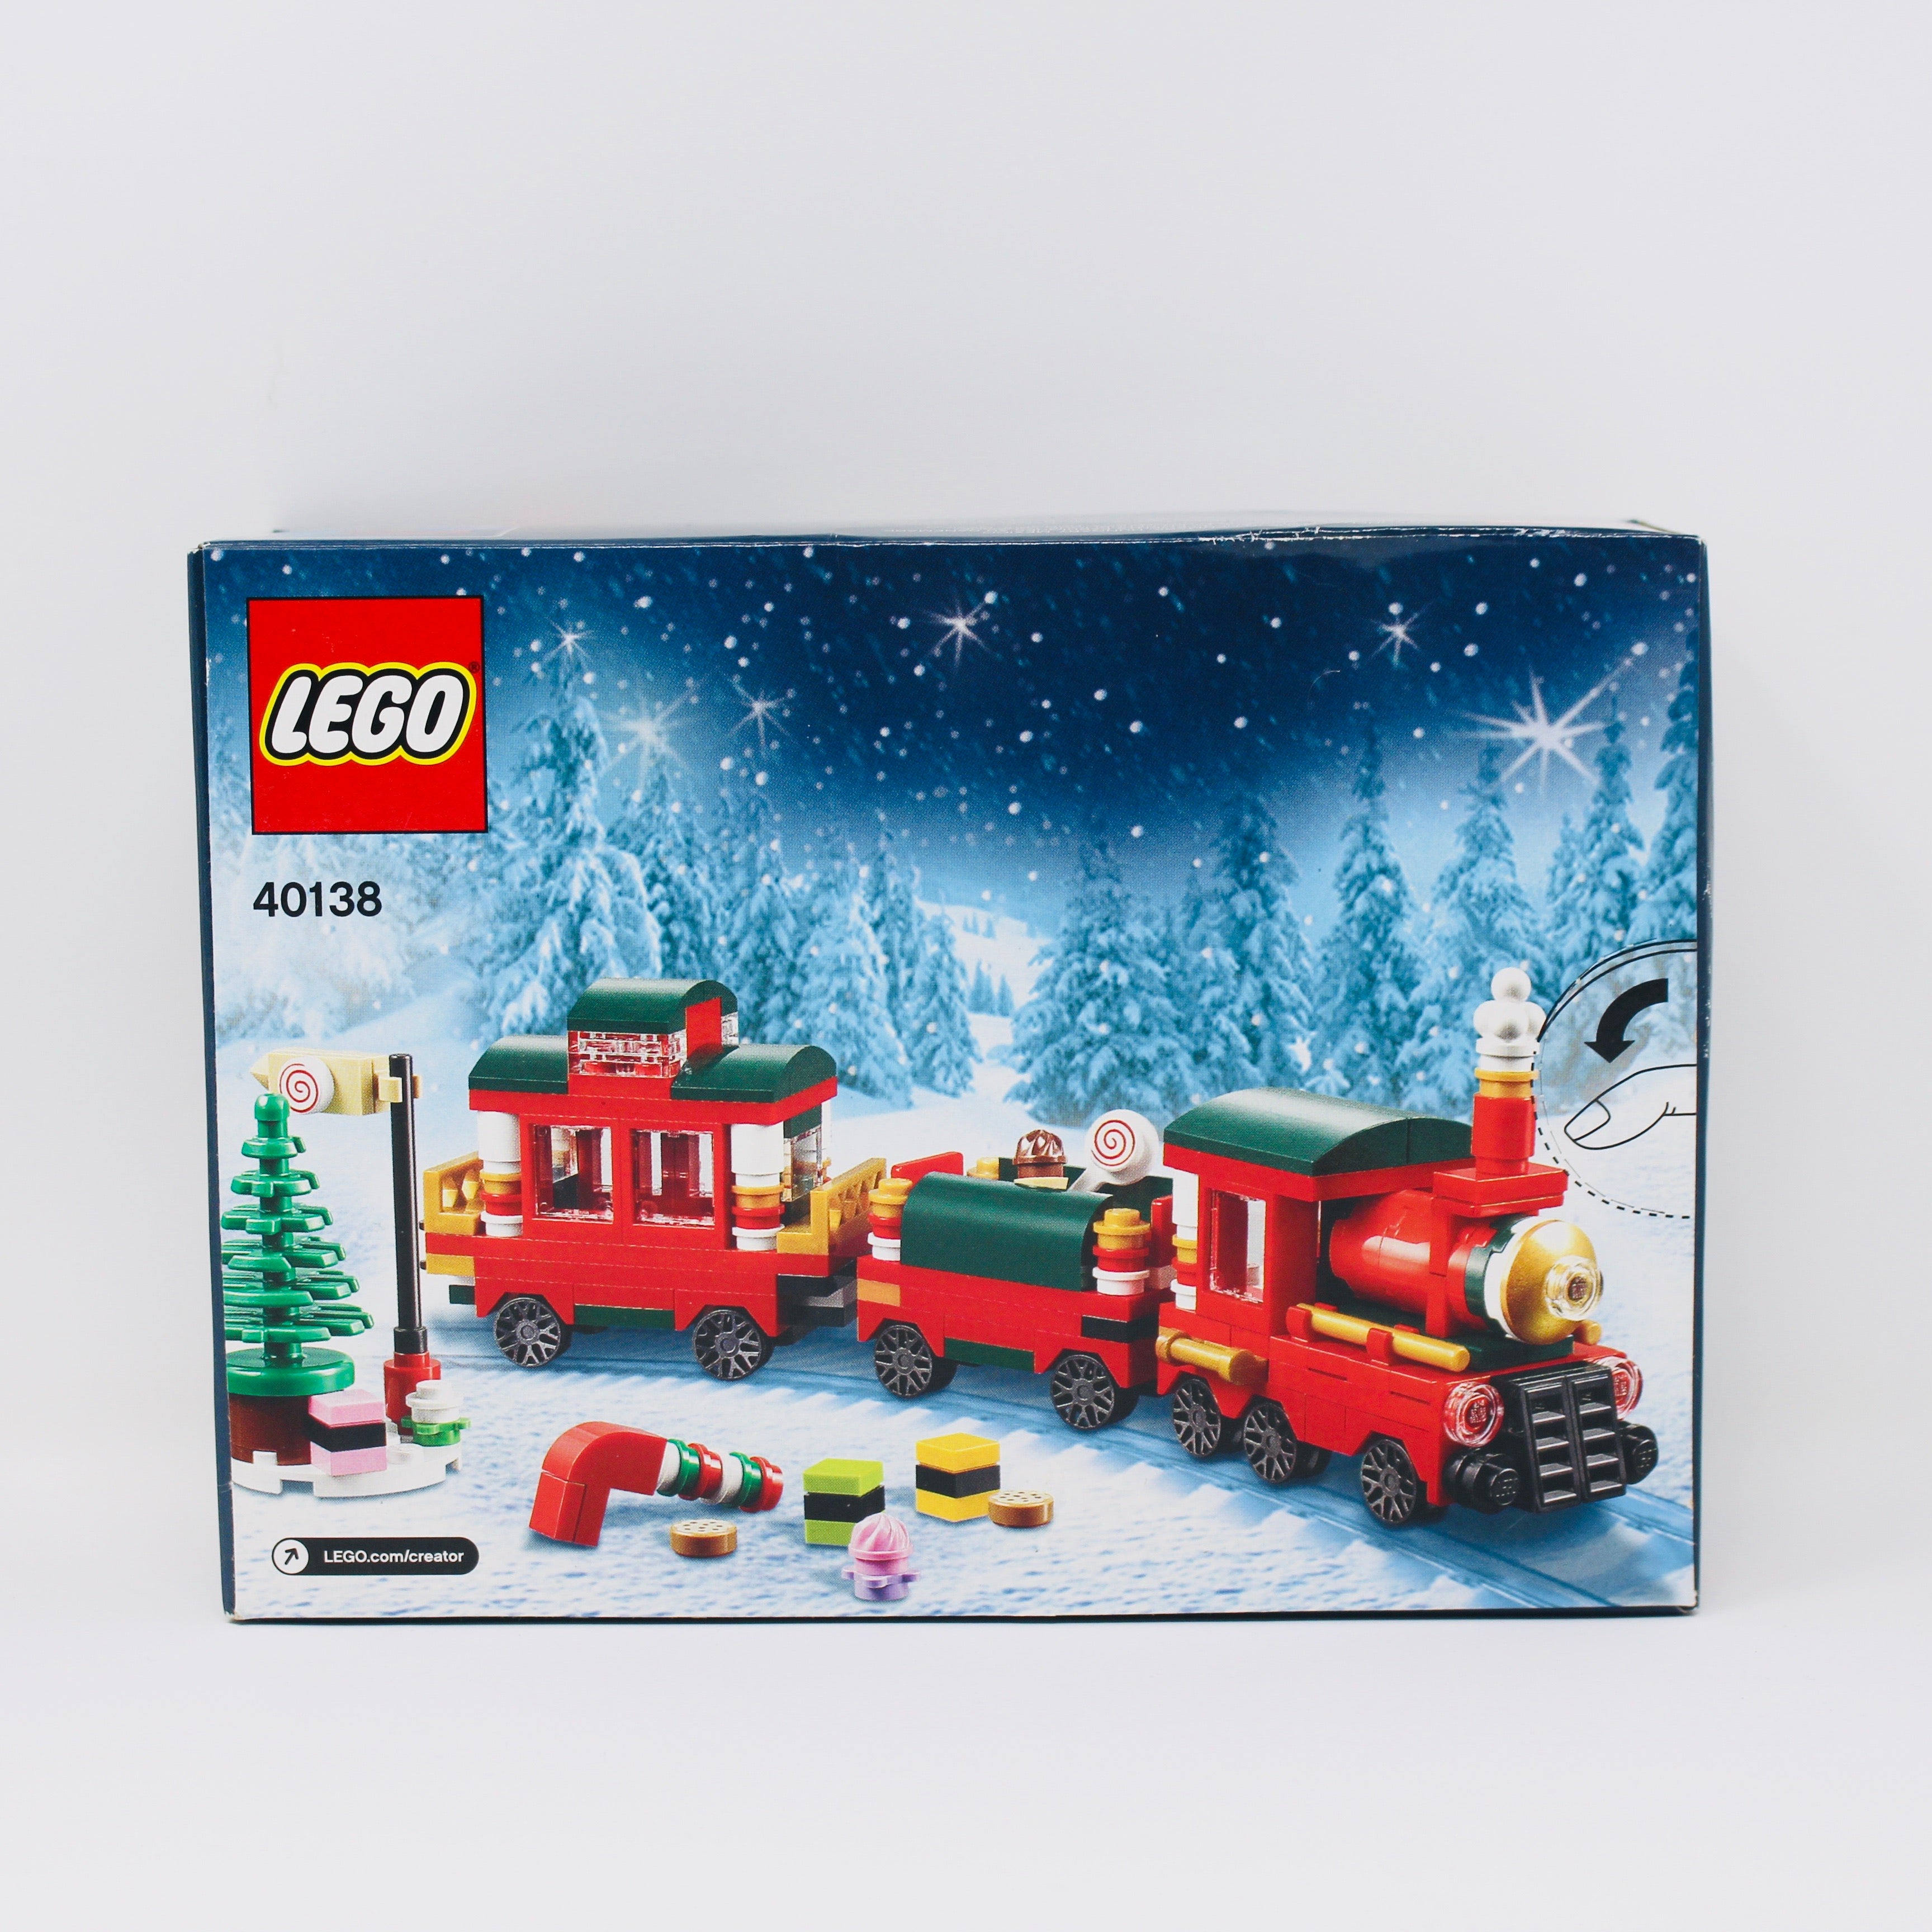 Retired Set 40138 LEGO Christmas Train